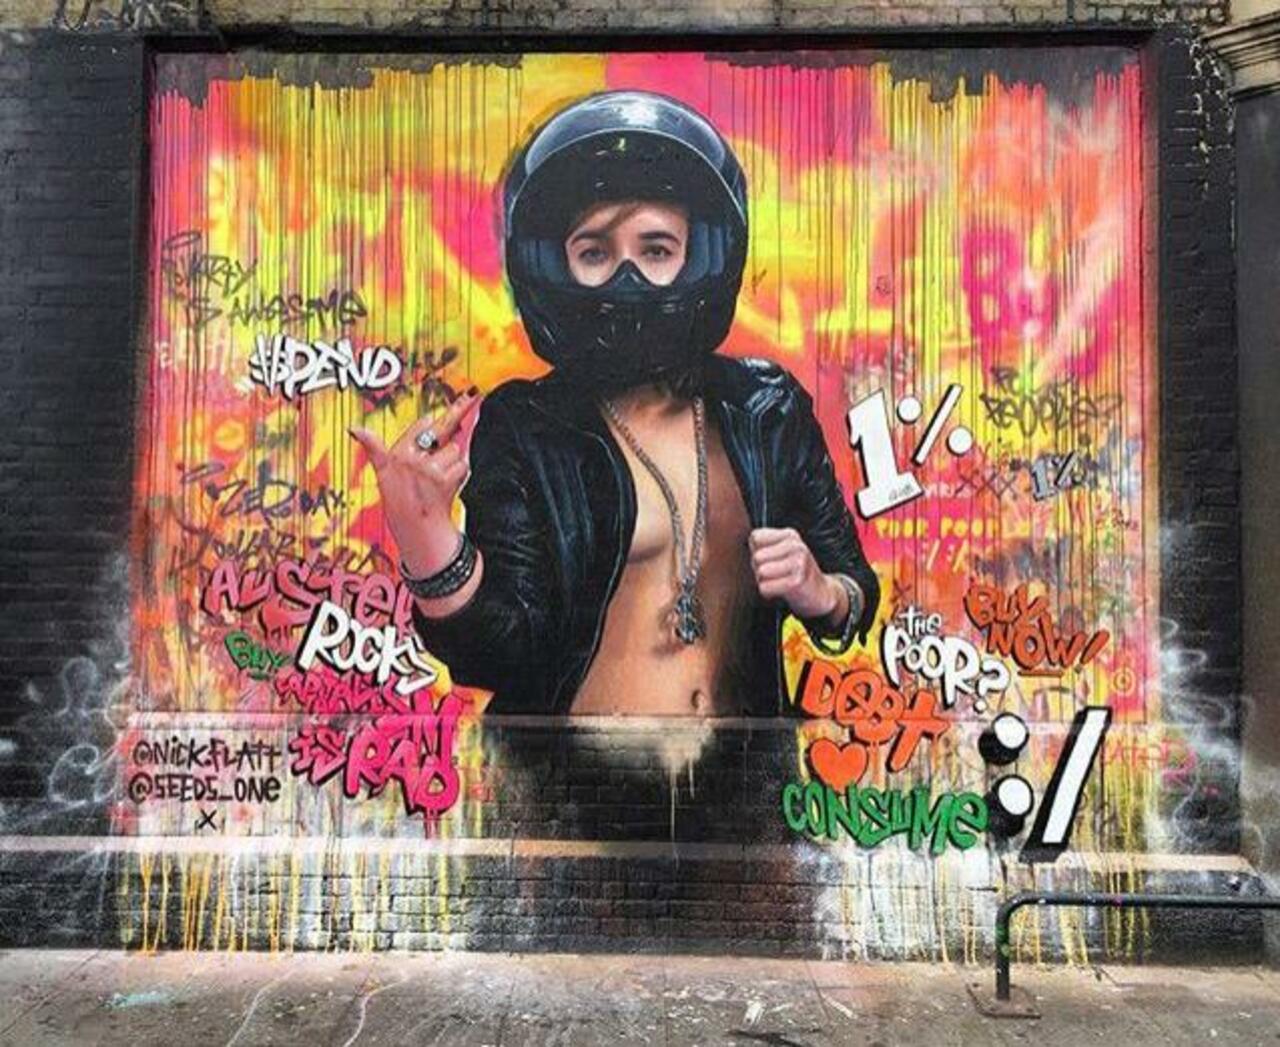 New Street Art collab by Nick Flatt &  Seeds One in London 

#art #graffiti #mural #streetart http://t.co/5aalDEgS8l